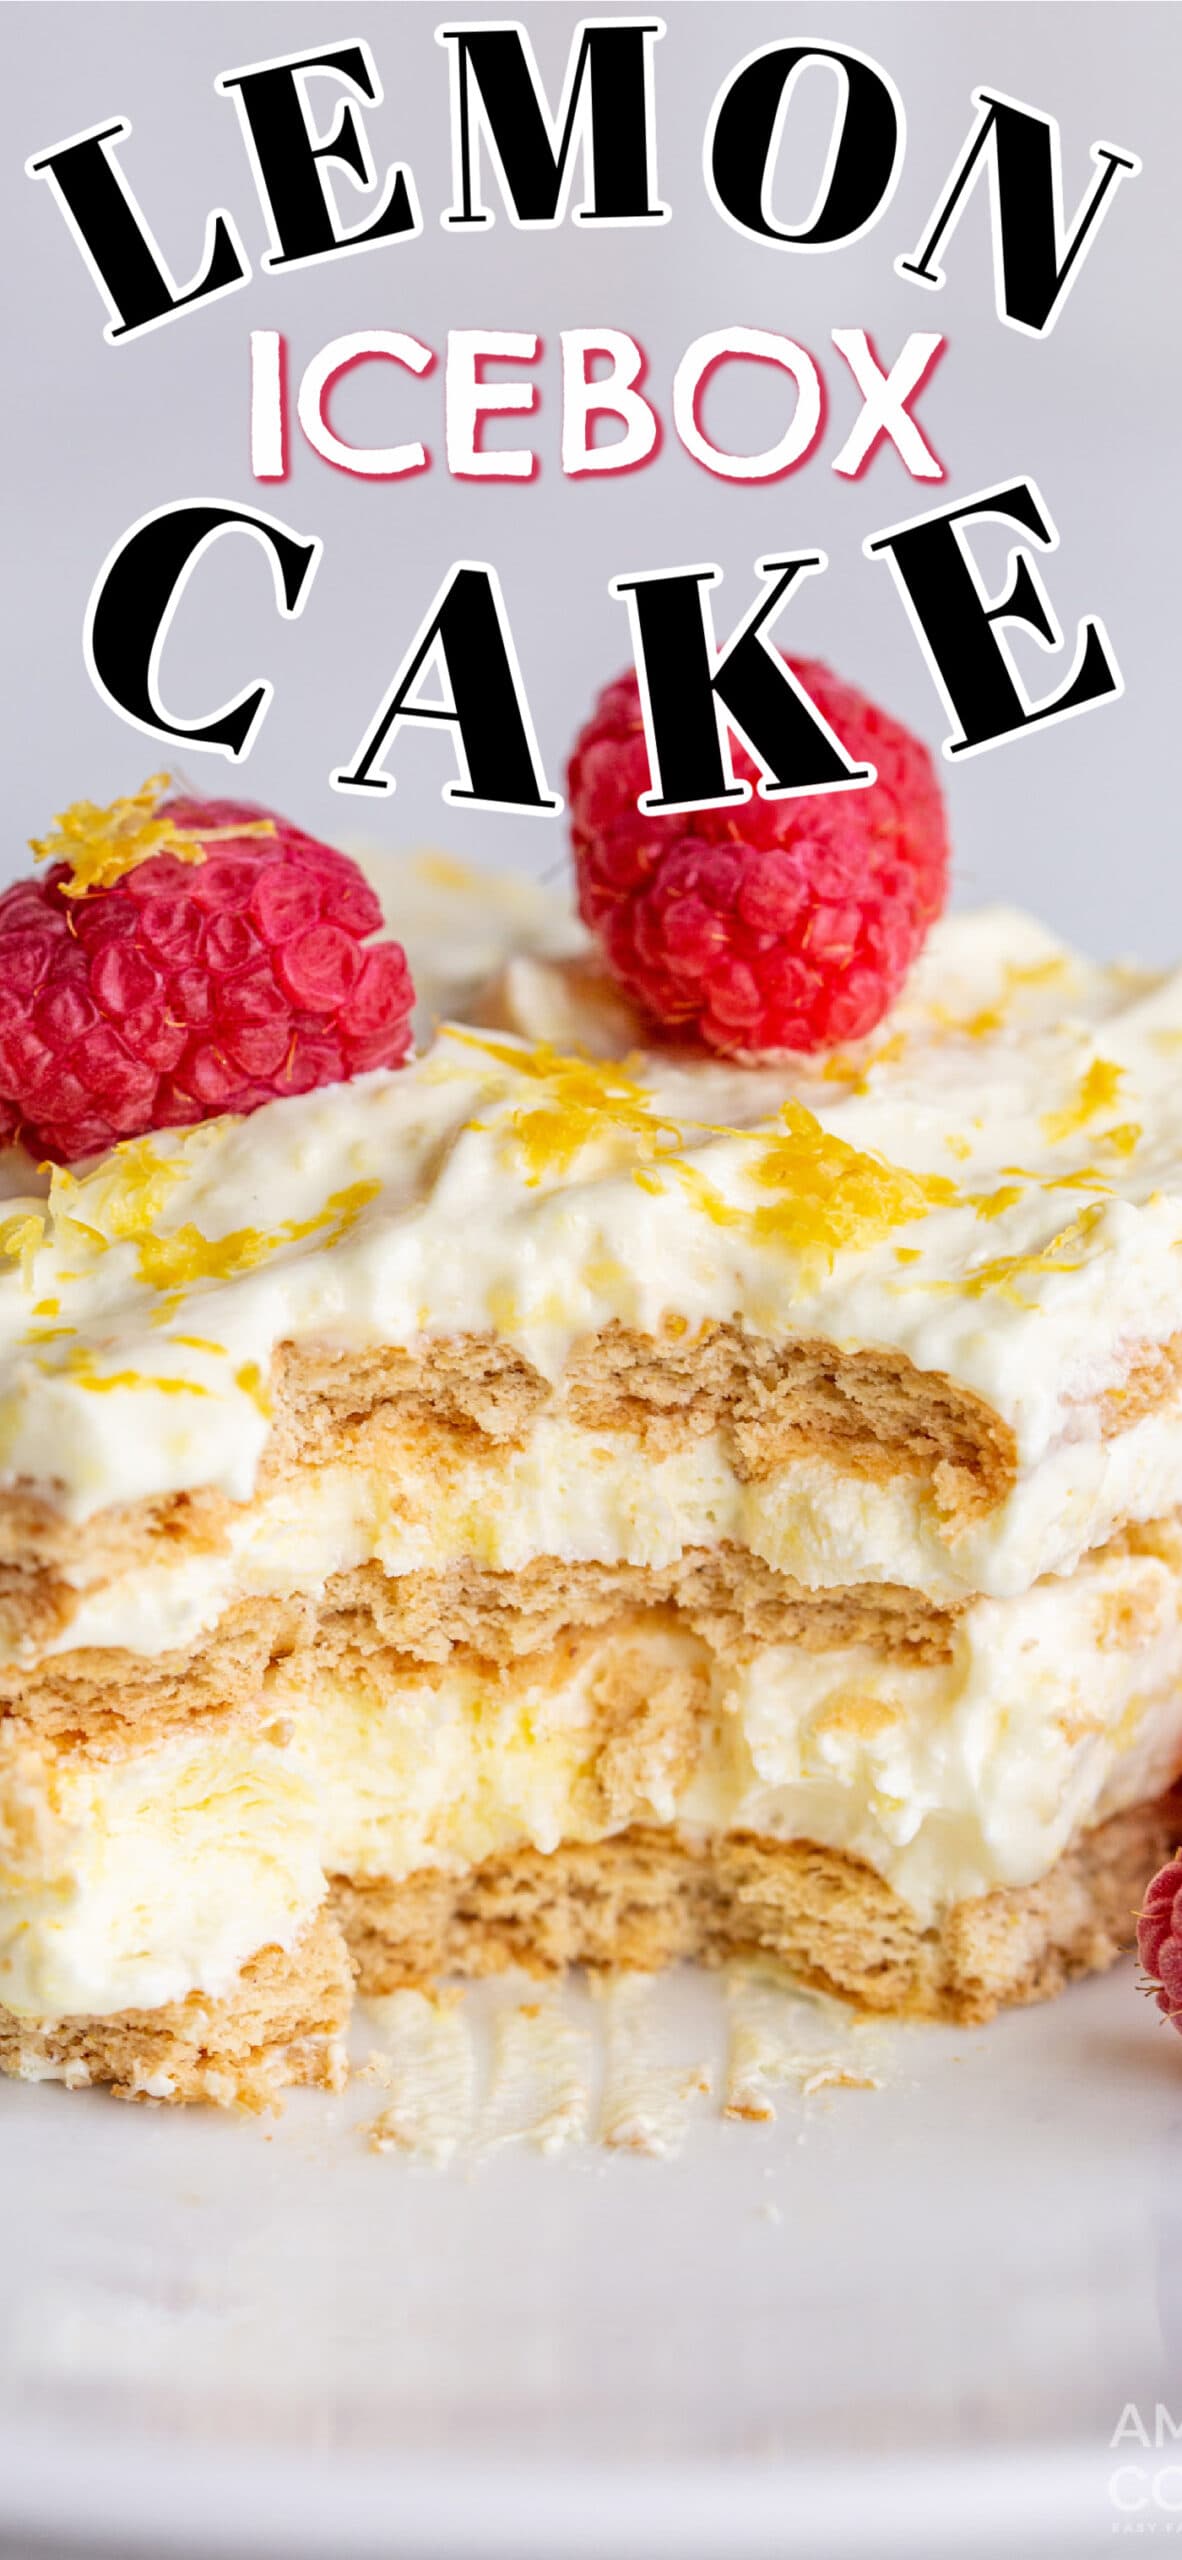 Lemon Icebox Cake - Amanda's Cookin' - No Bake Desserts